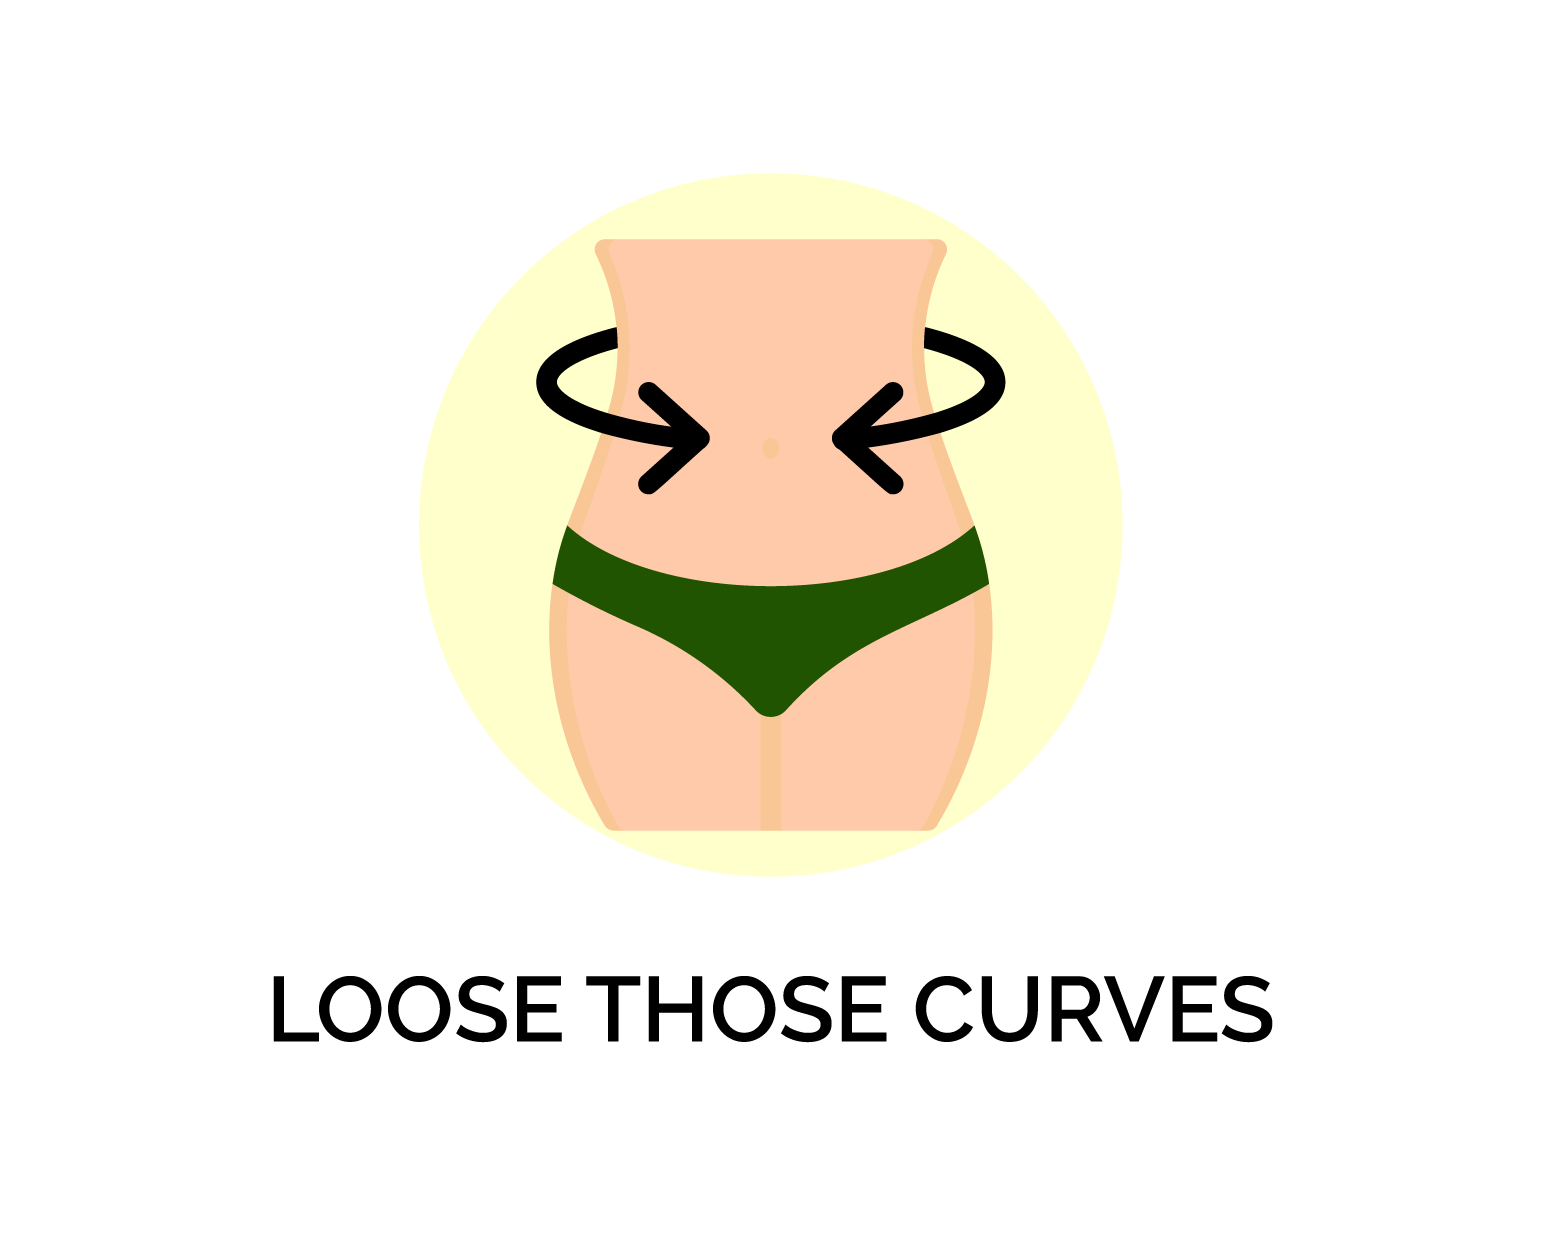 Loose those curves